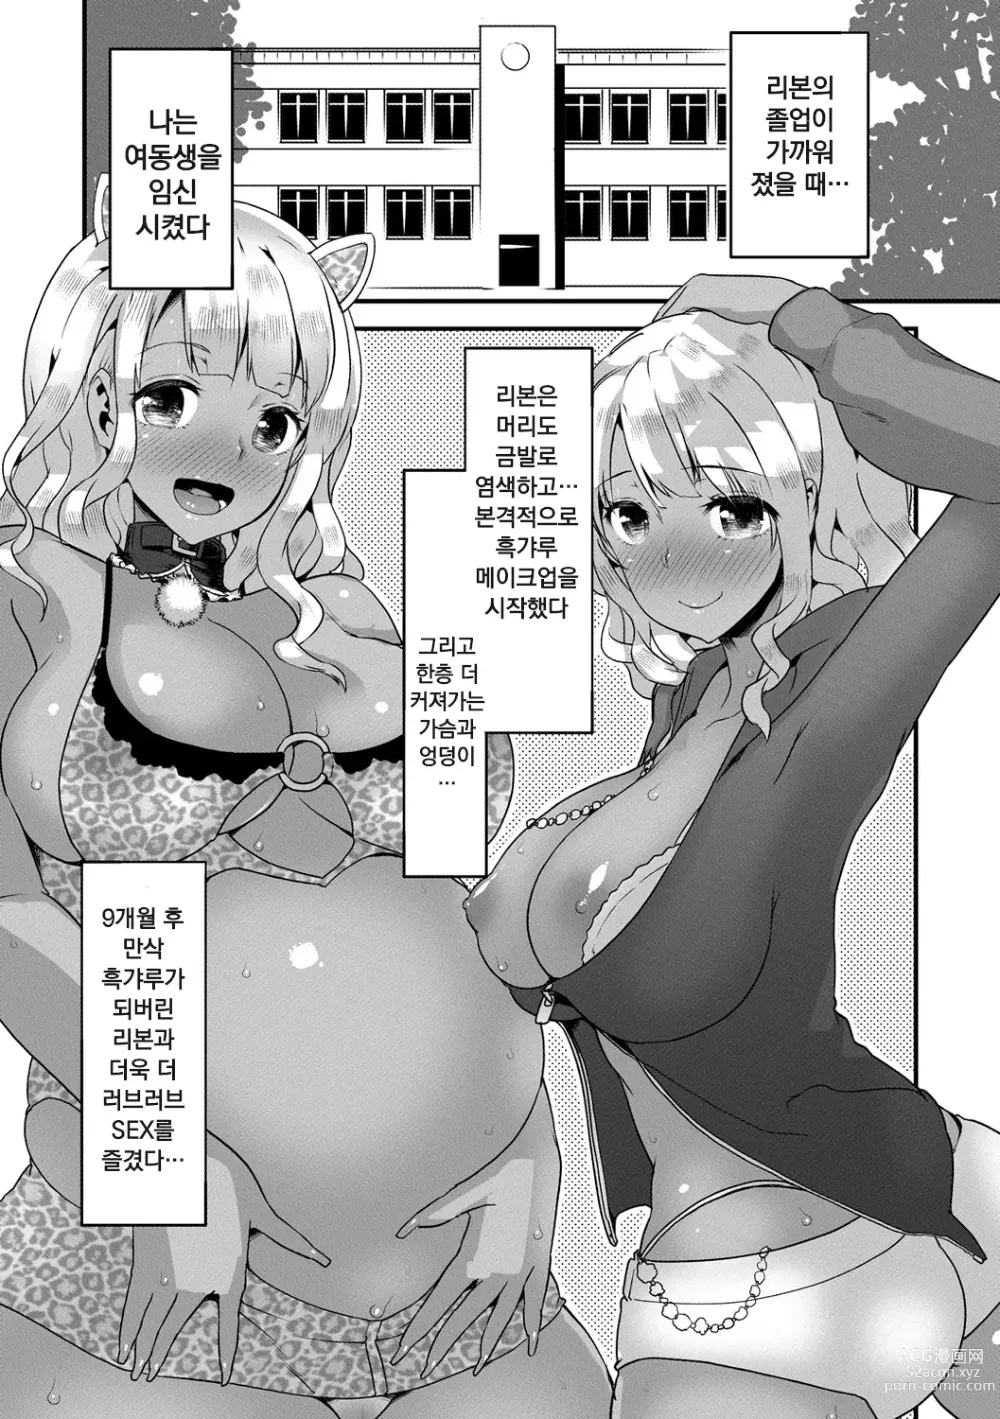 Page 194 of manga Mein Hole - Girls Hole